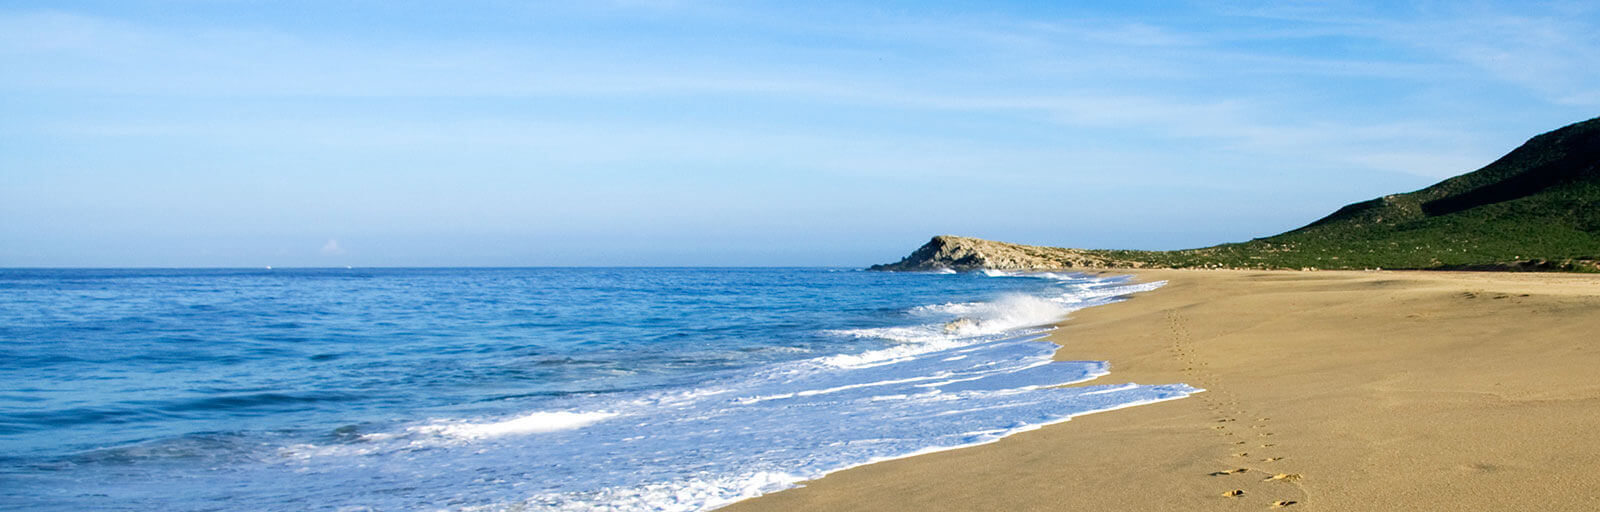 Yoga Retreat in Mexico: Golden Sand Beaches